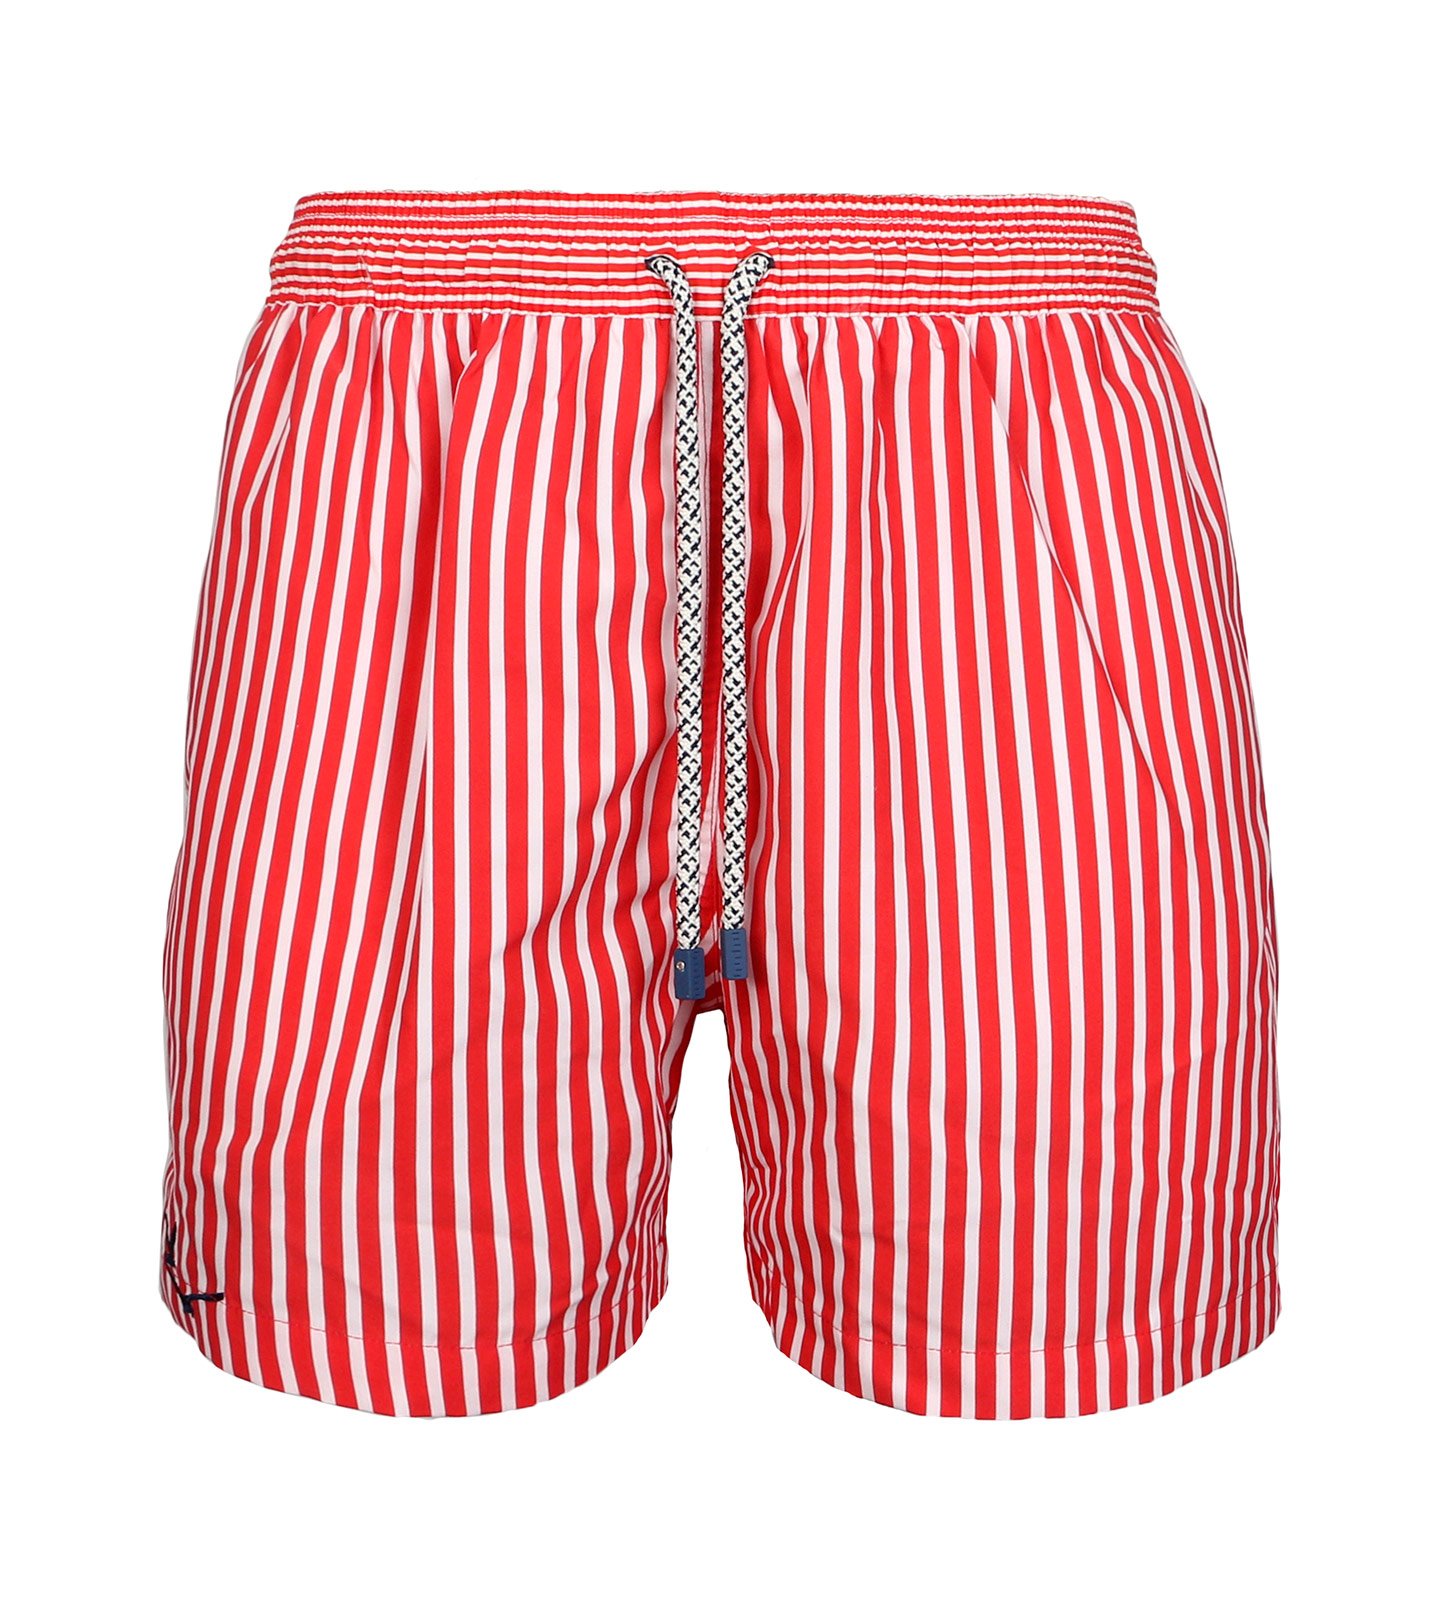 Red And White Swims Shorts In Stripes - Swim Shorts Marine Stripes Slim ...